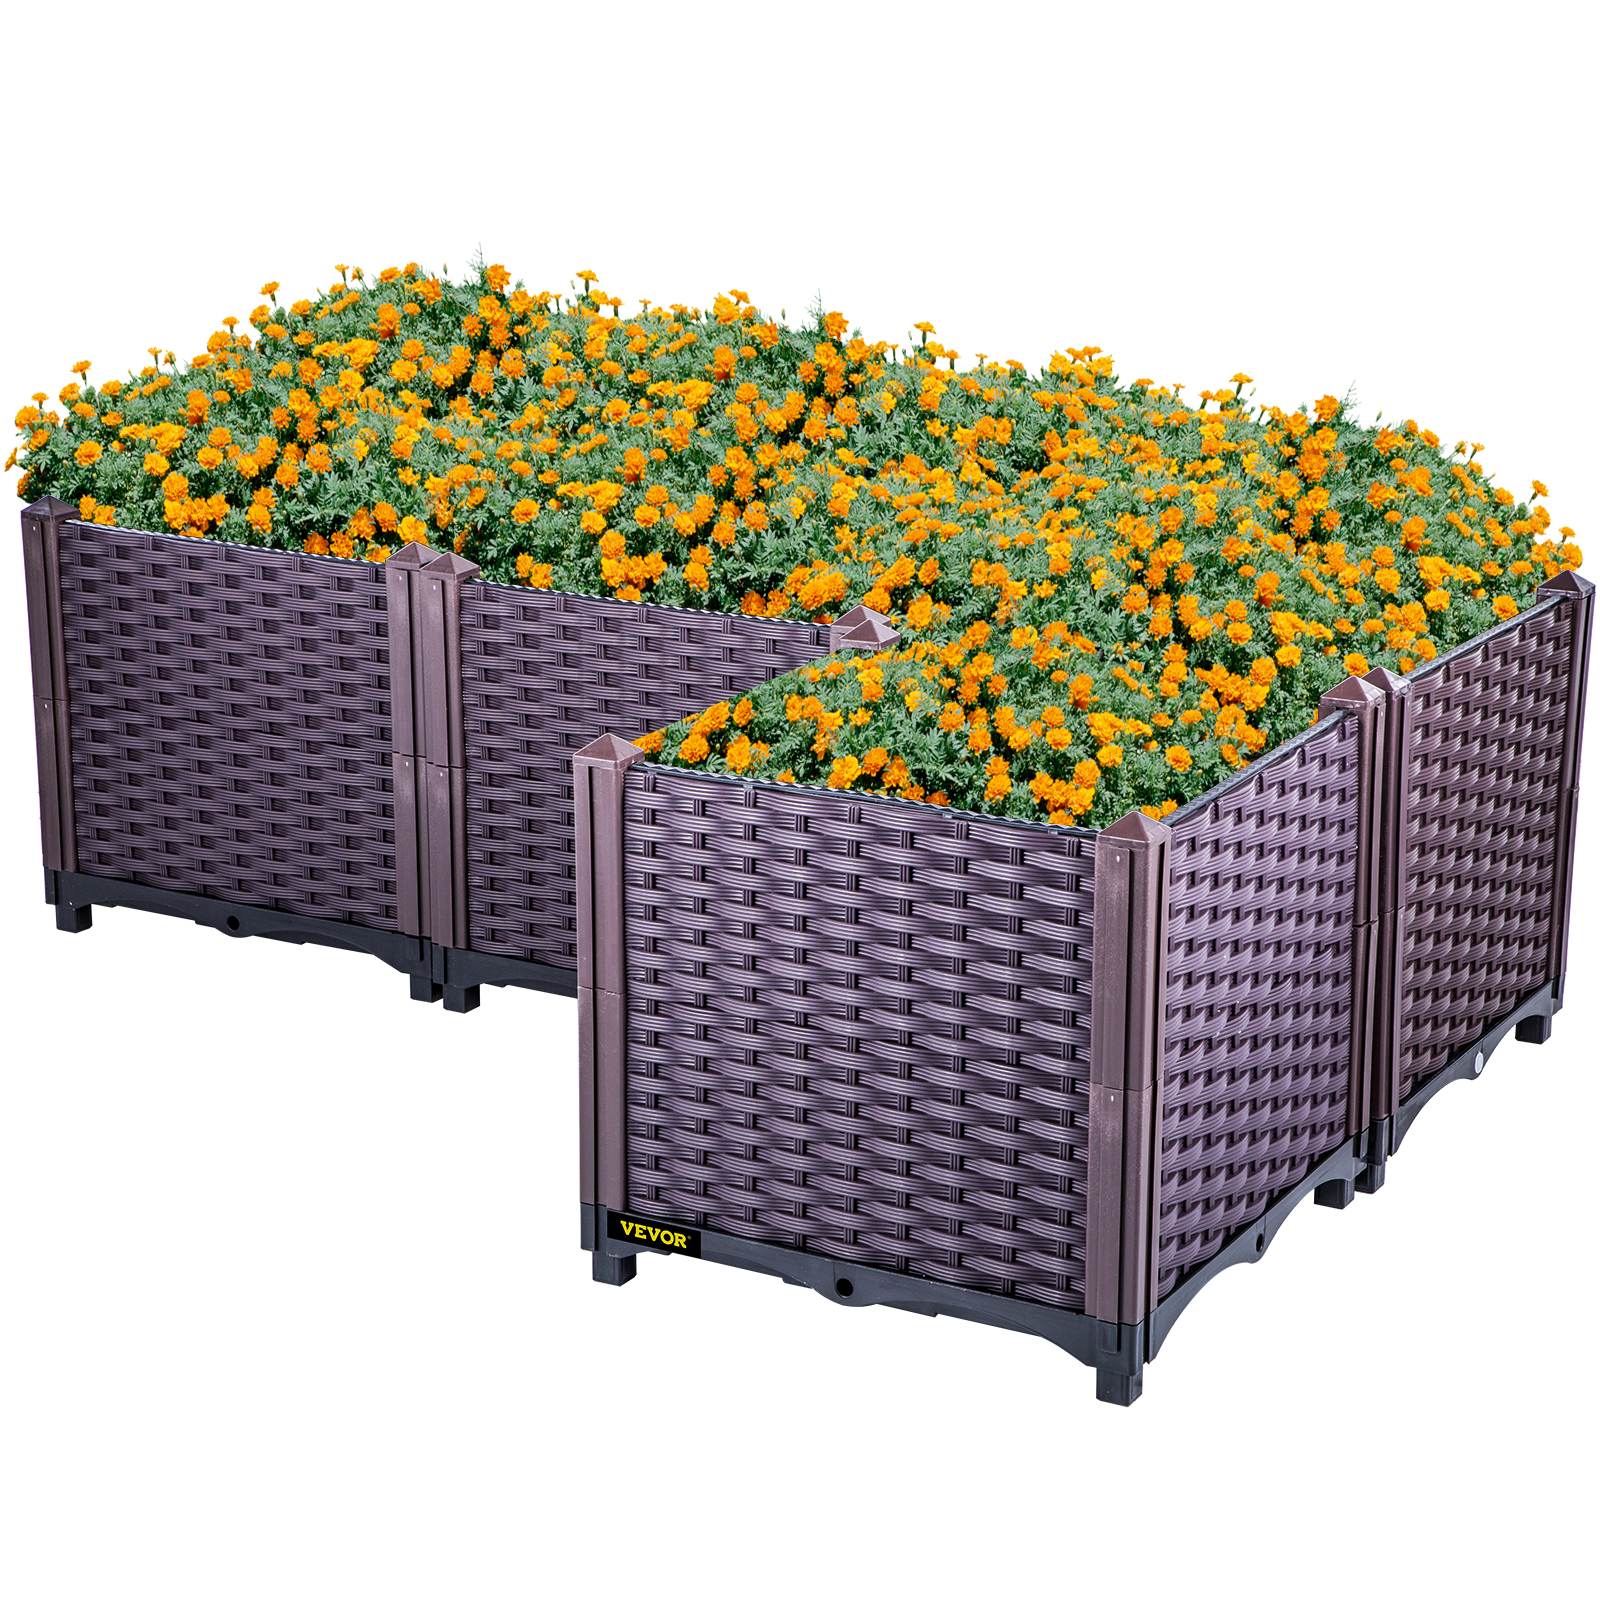 Vevor Plastic Raised Garden Bed Flower Box Kit 14.5" Brown Rattan Style Set Of 4 от Vevor Many GEOs